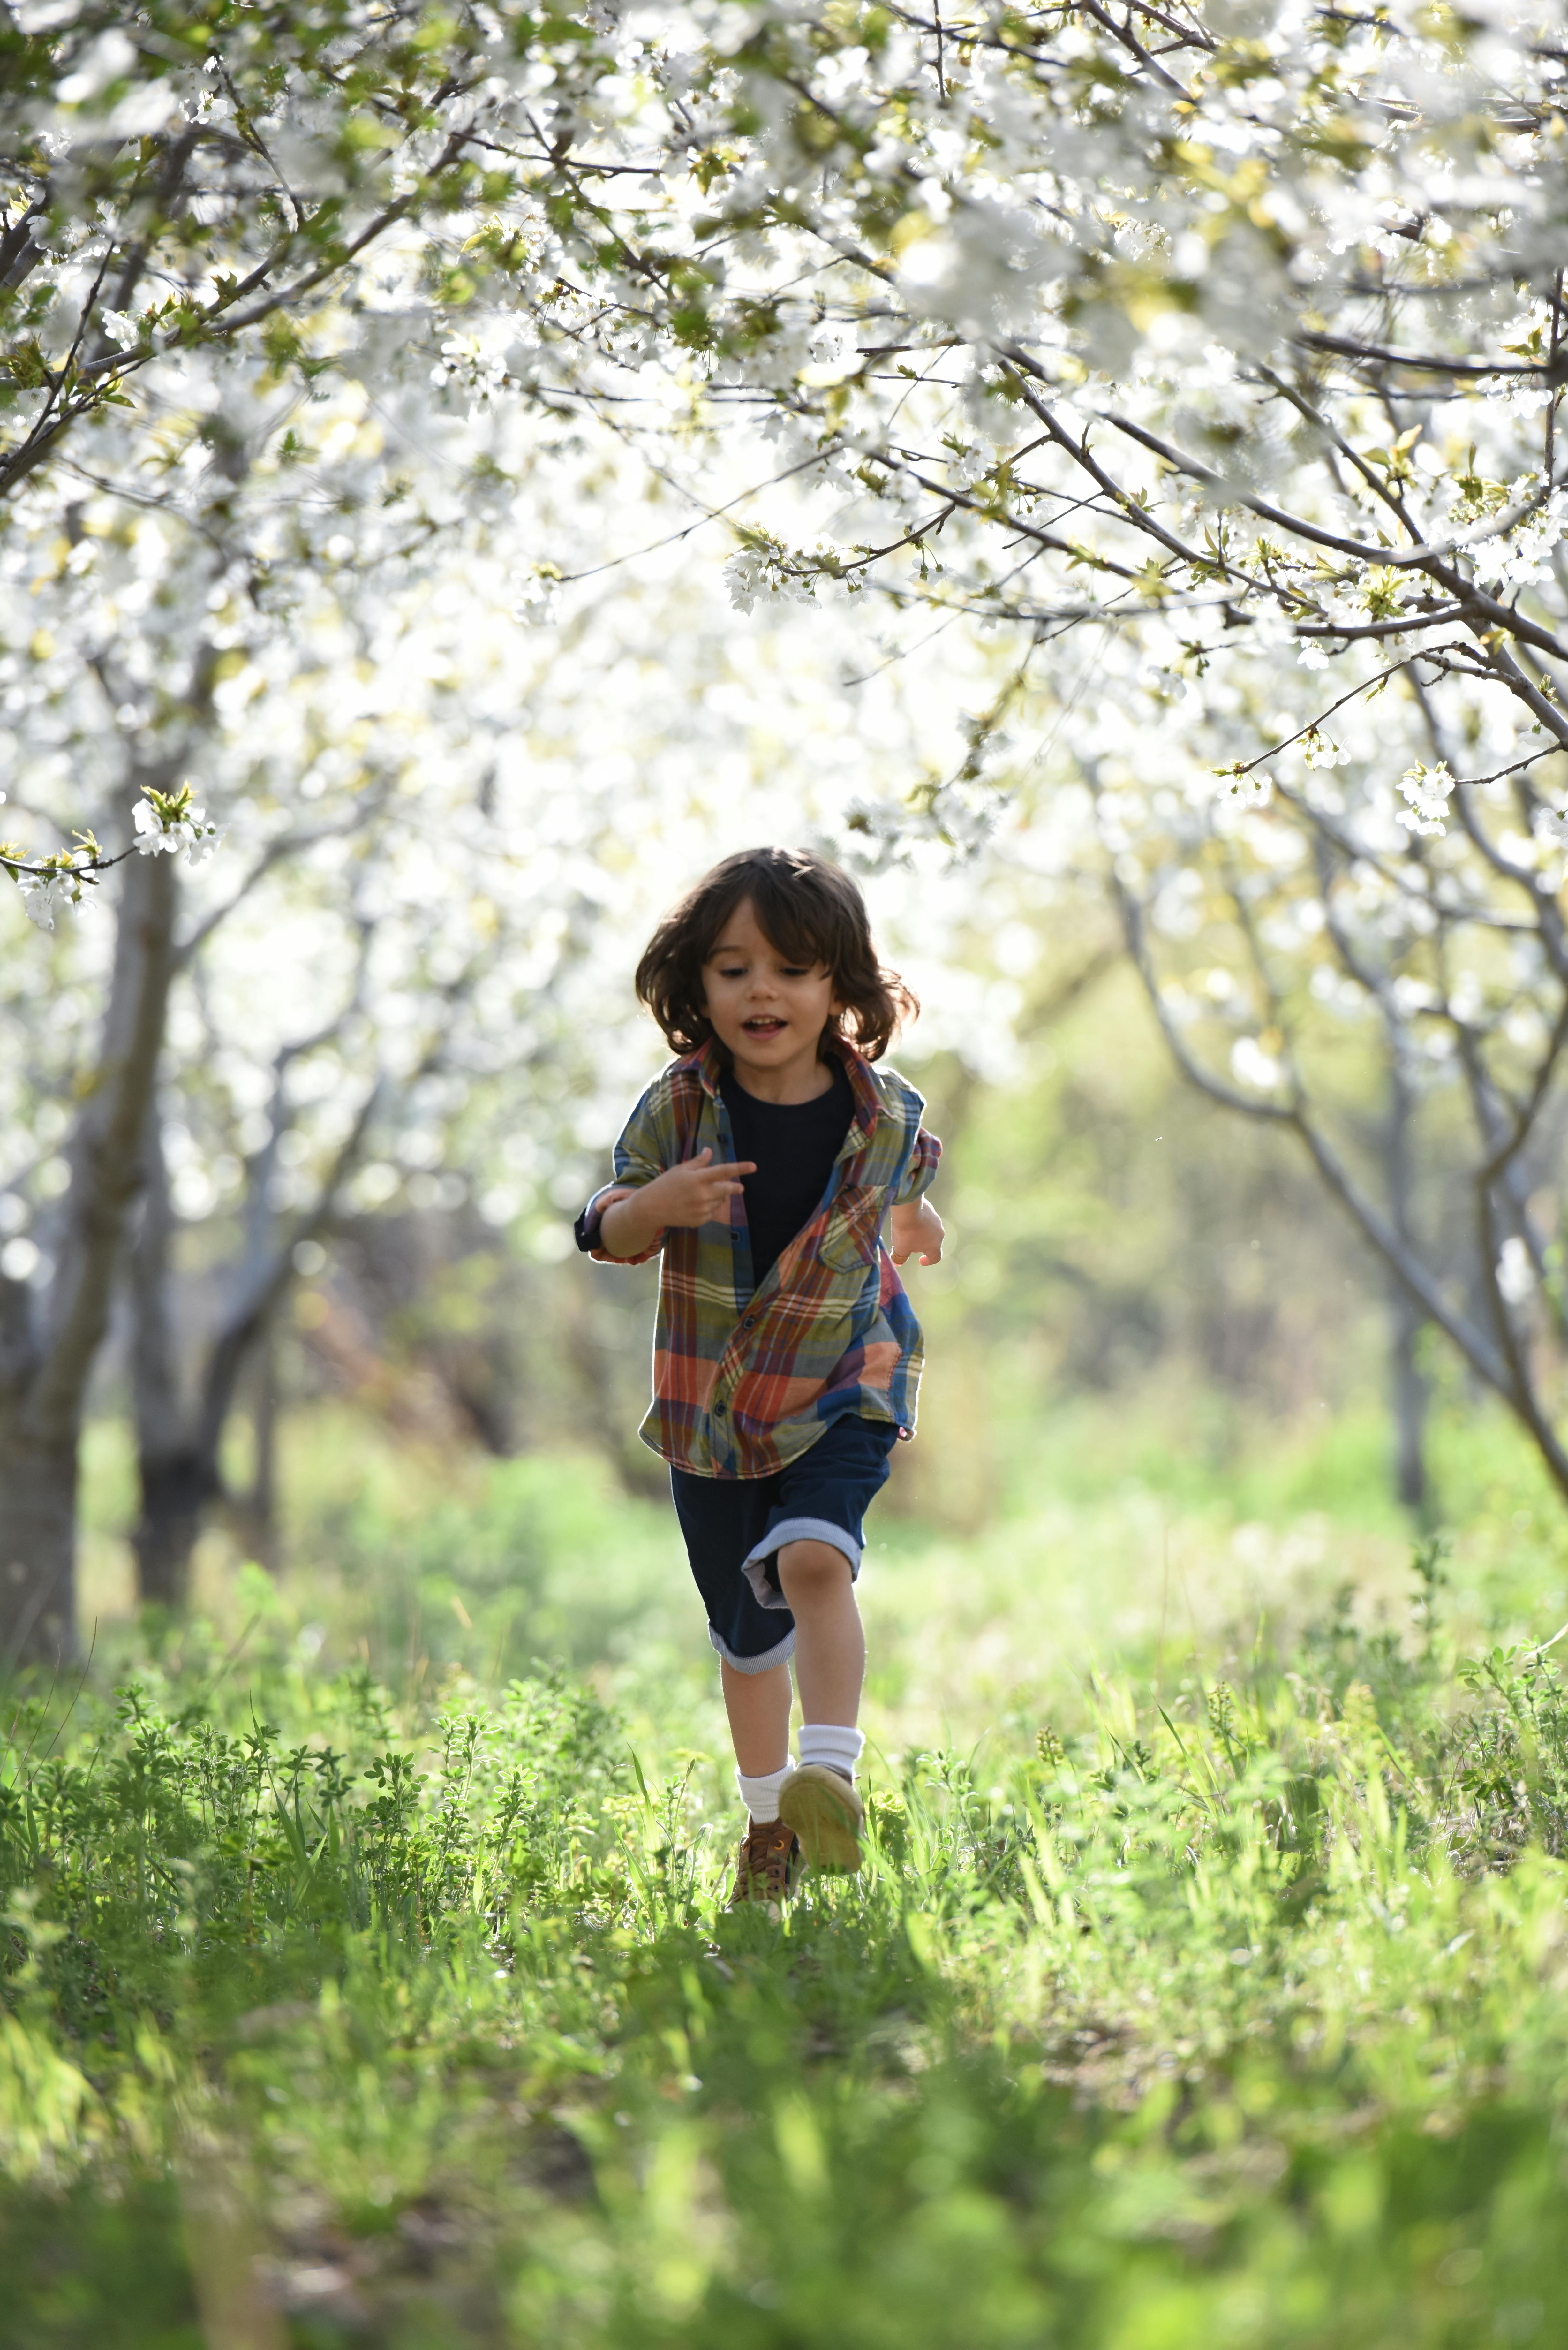 A little boy running around in a field | Source: Pexels